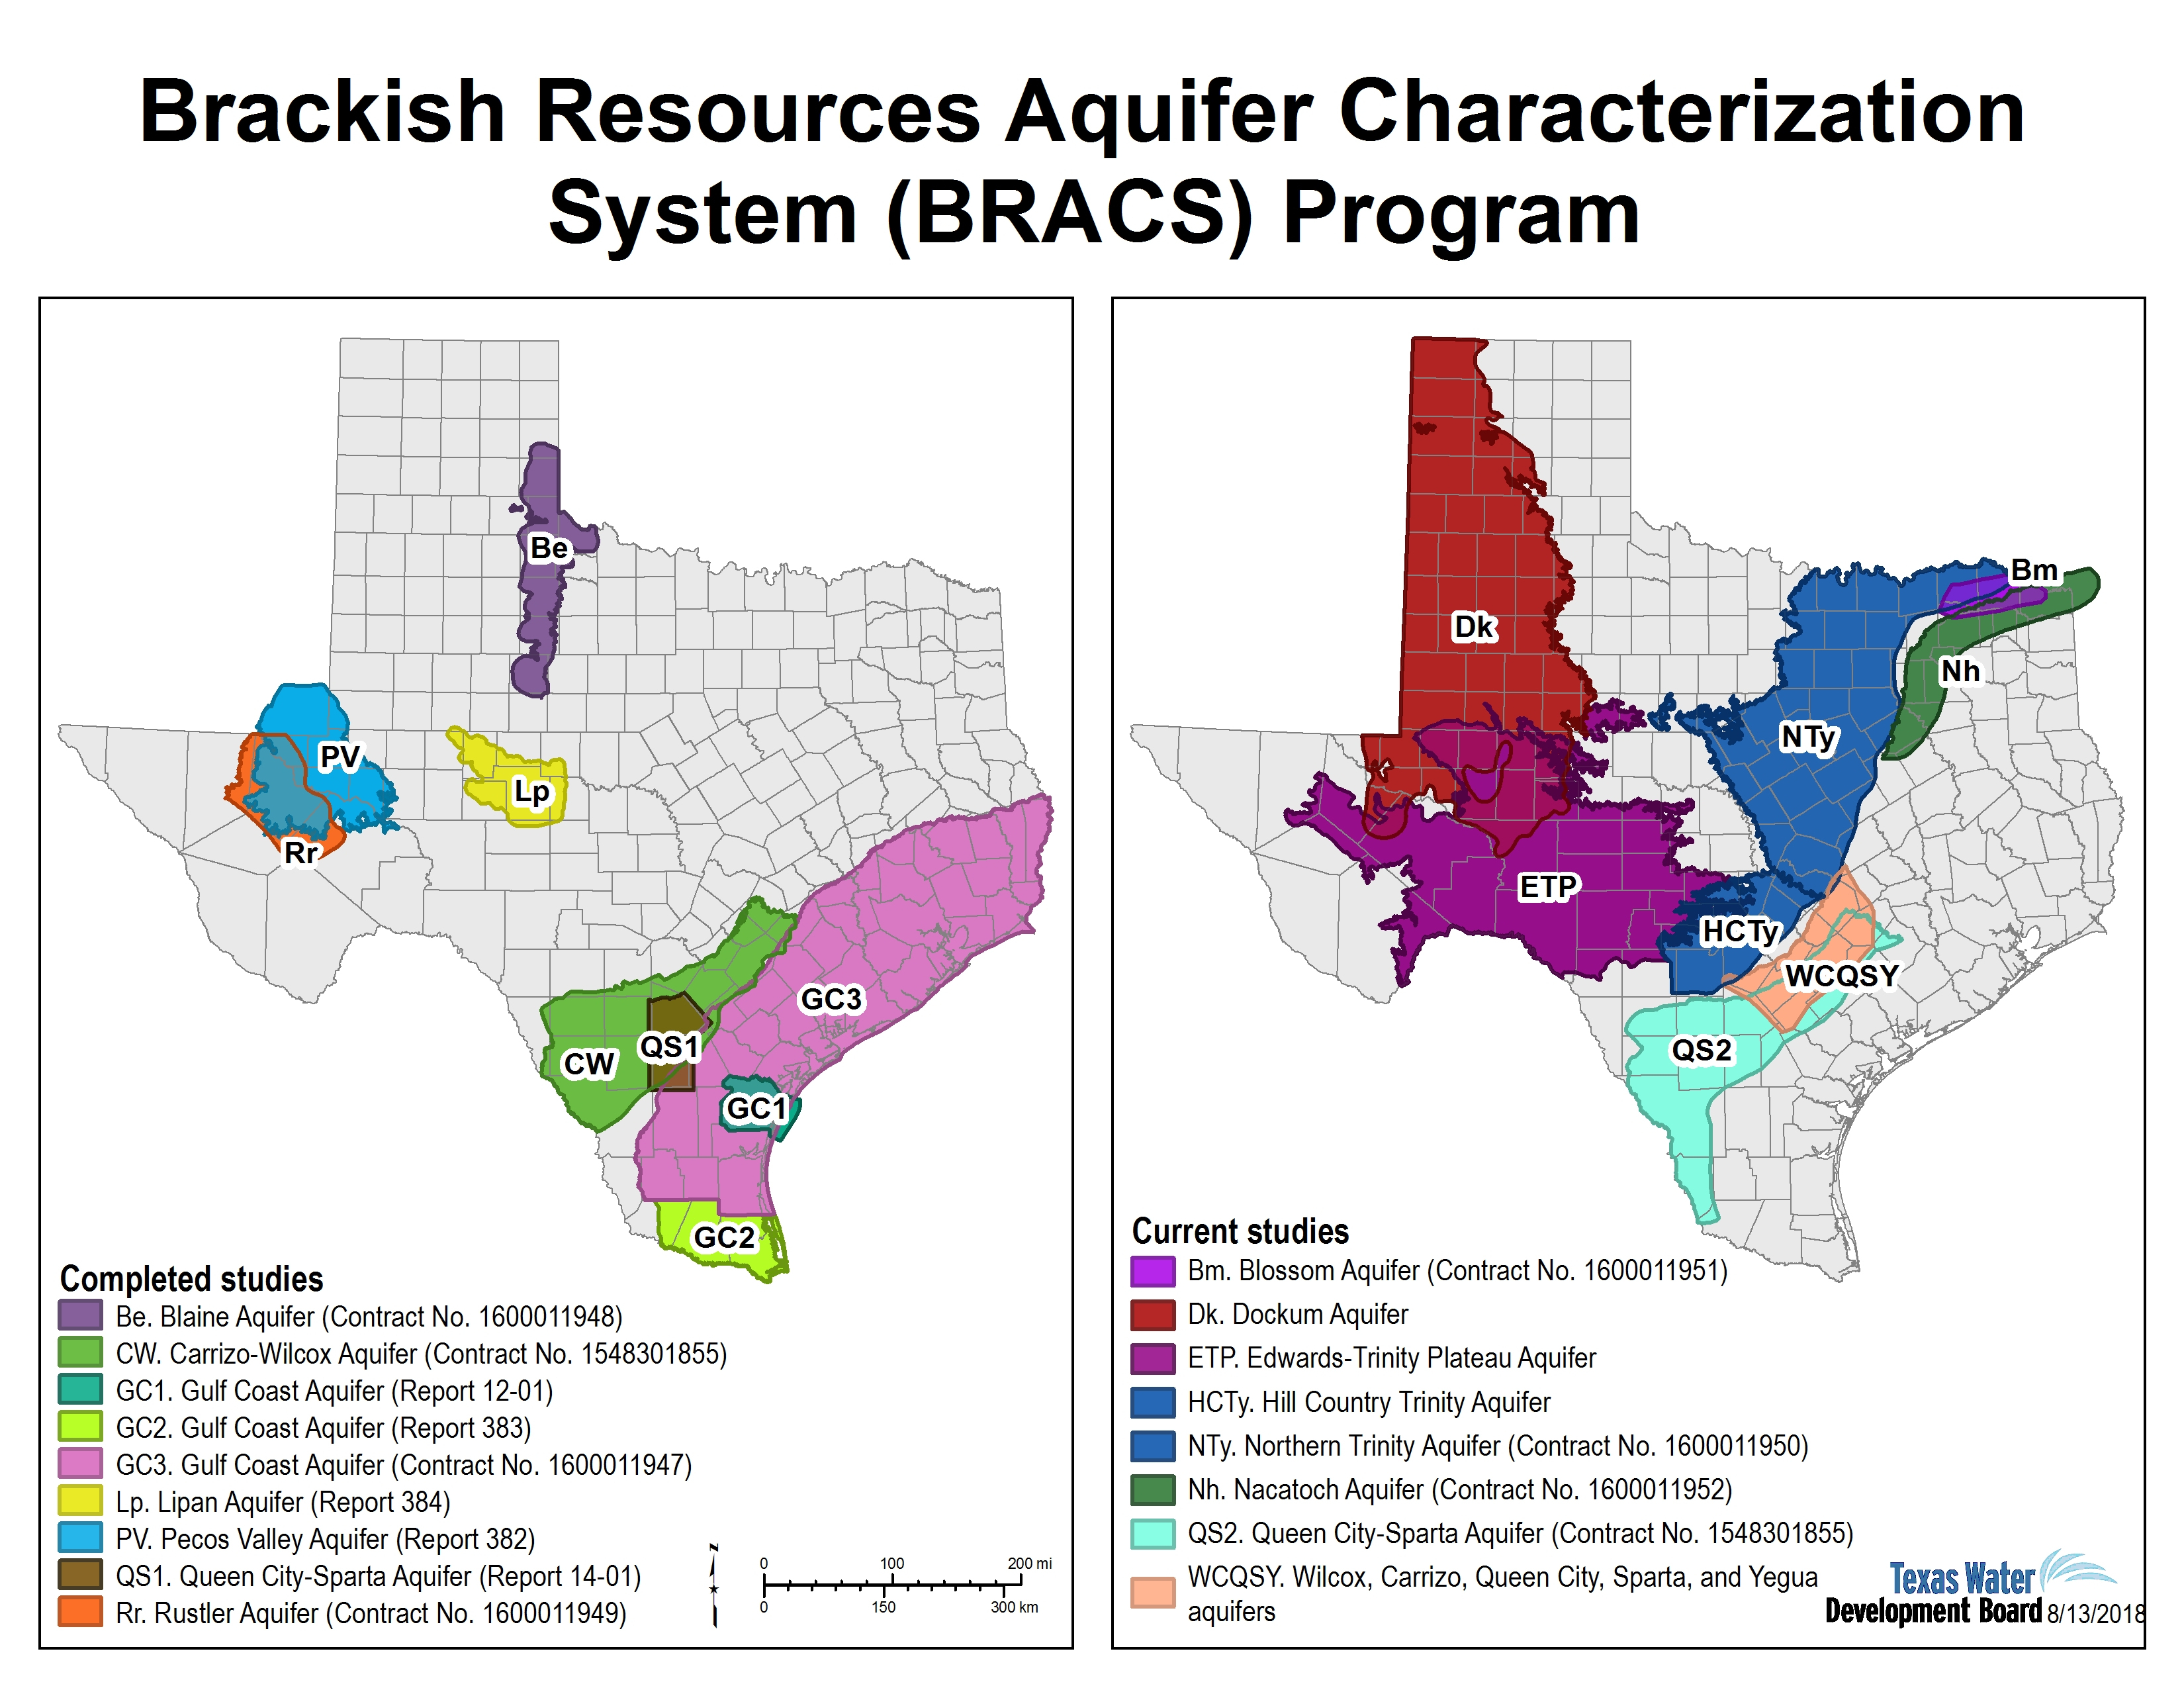 Innovative Water Technologies - Bracs | Texas Water Development Board - Texas Water Development Board Well Map